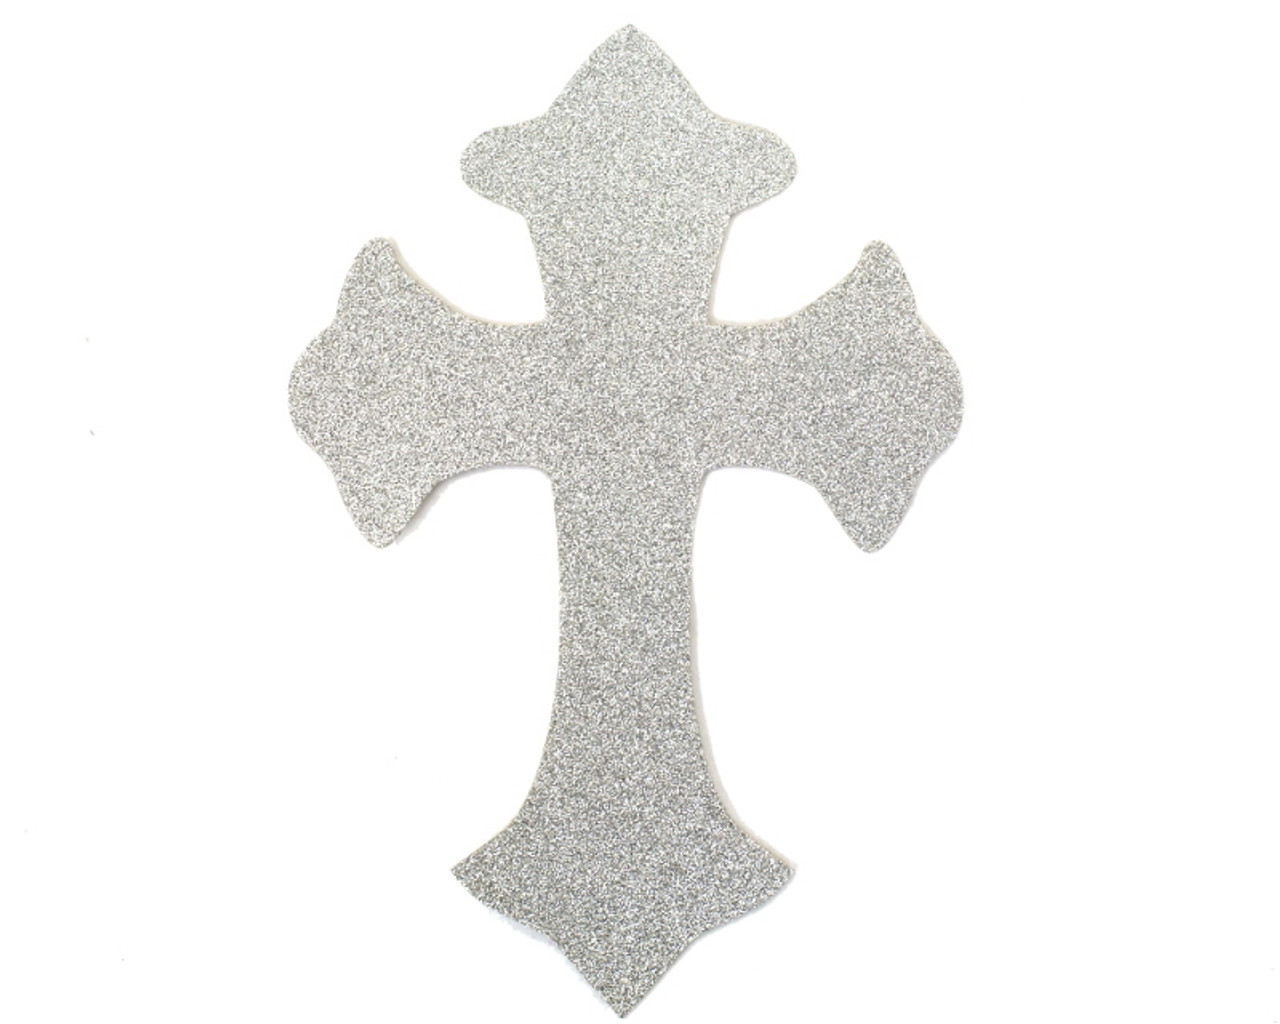 Diamond Star Blossom pendant and ornament 3D model 3D printable